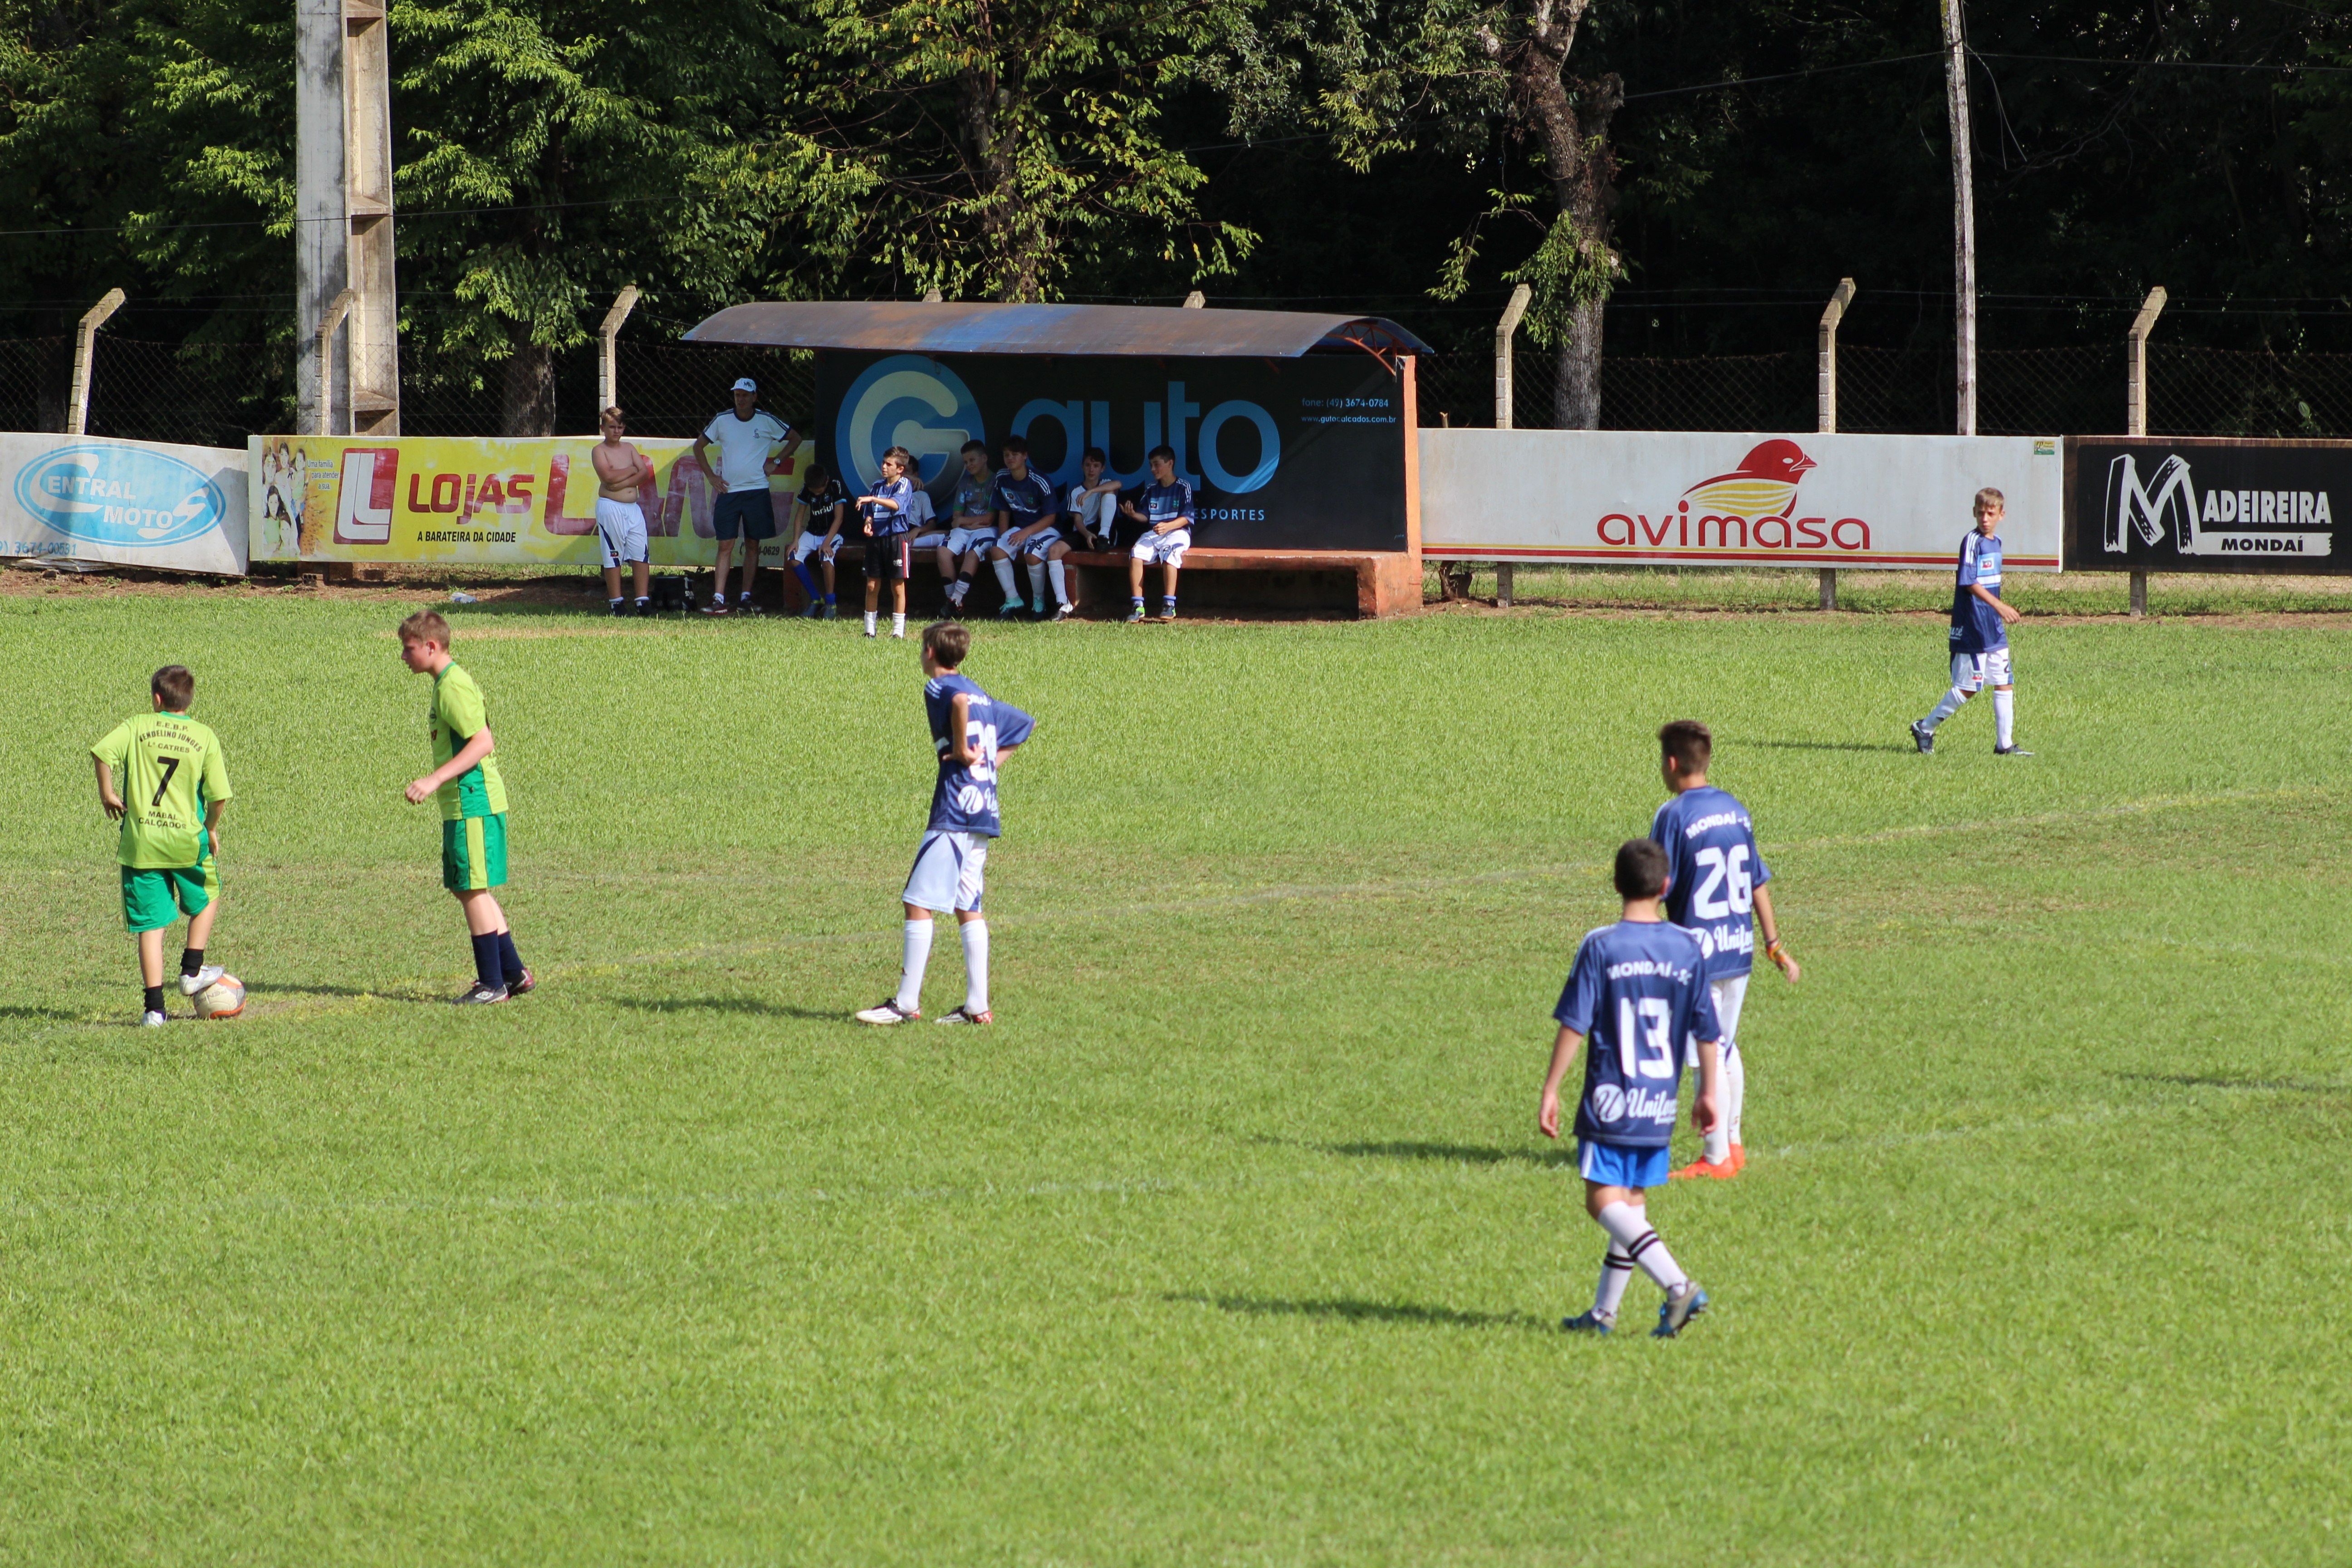 Mondaí realiza a disputa dos Jogos Escolares de Santa Catarina, no Moleque Bom de Bola